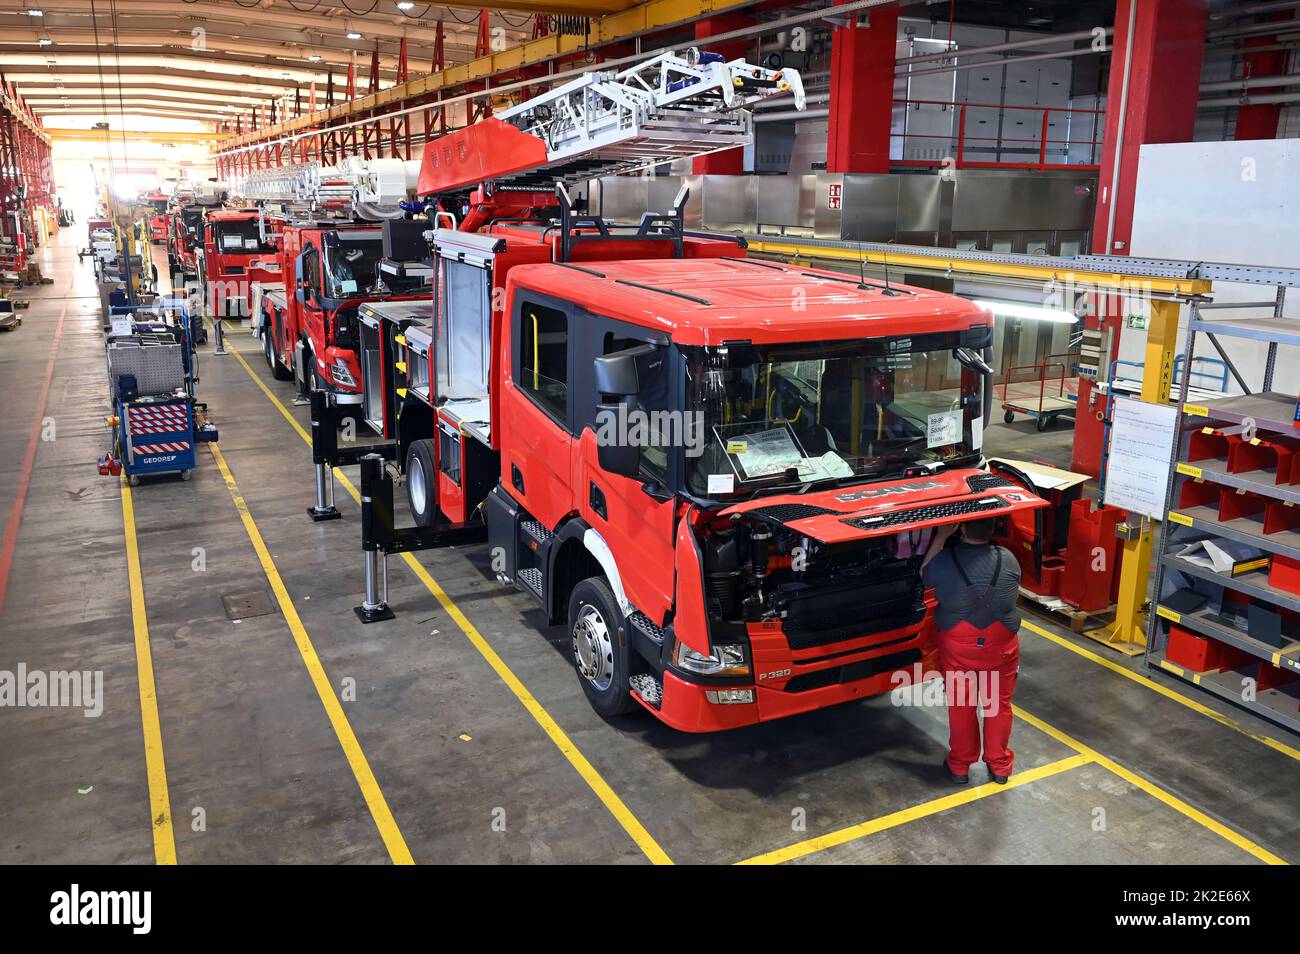 CSRWire - Steyr Supports Austrian Fire Brigade School With Tractor